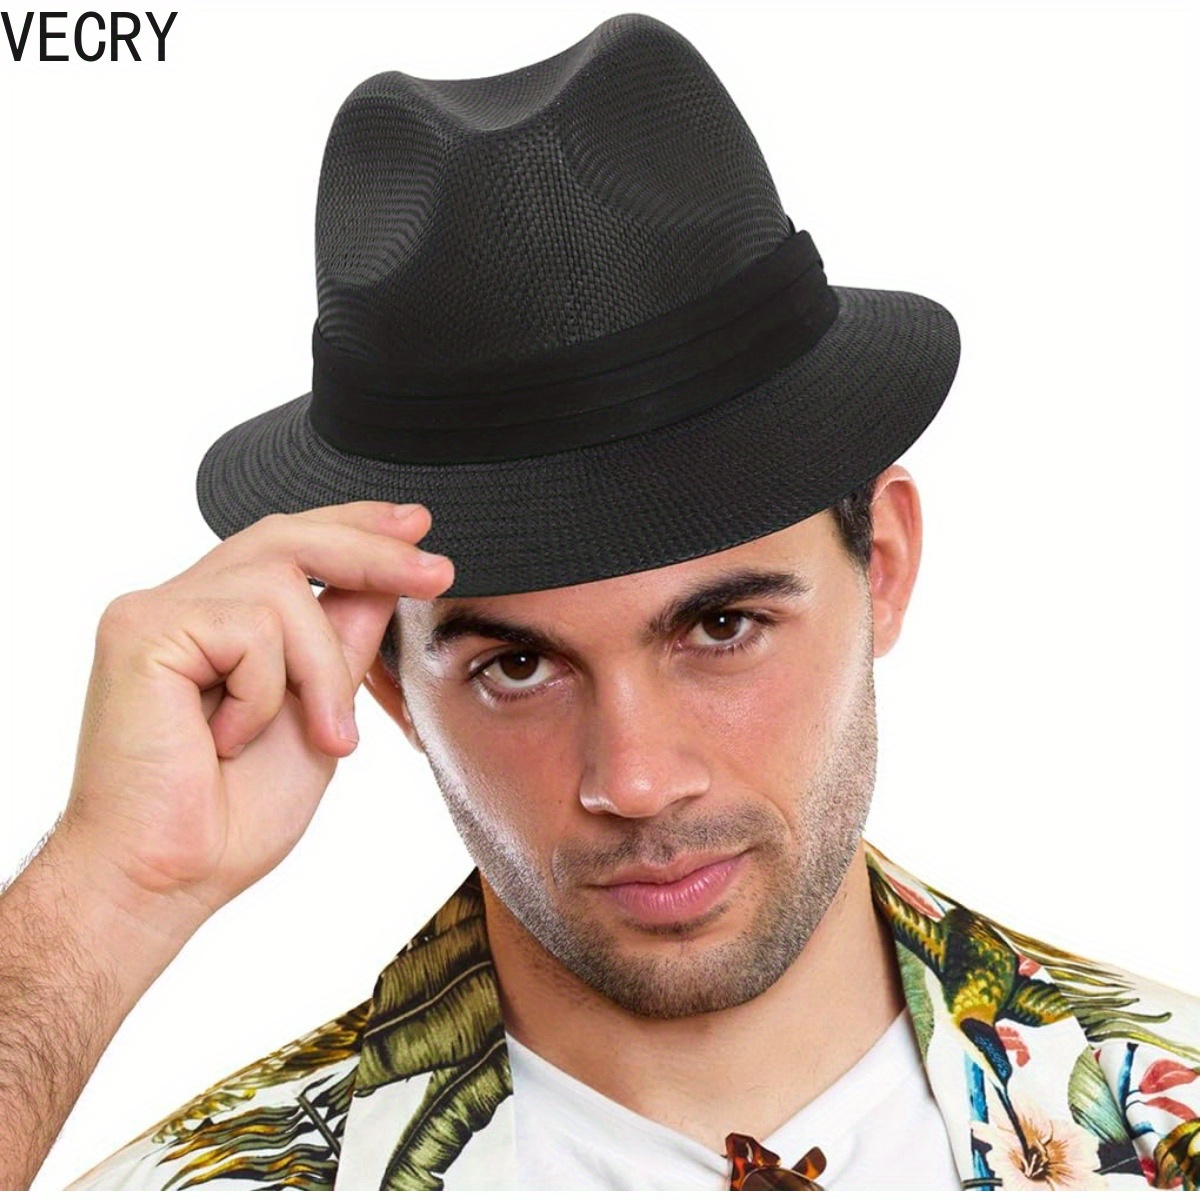 

Vecry Mens Straw Panama Fedora Sun Hat Summer Beach Trilby Hats